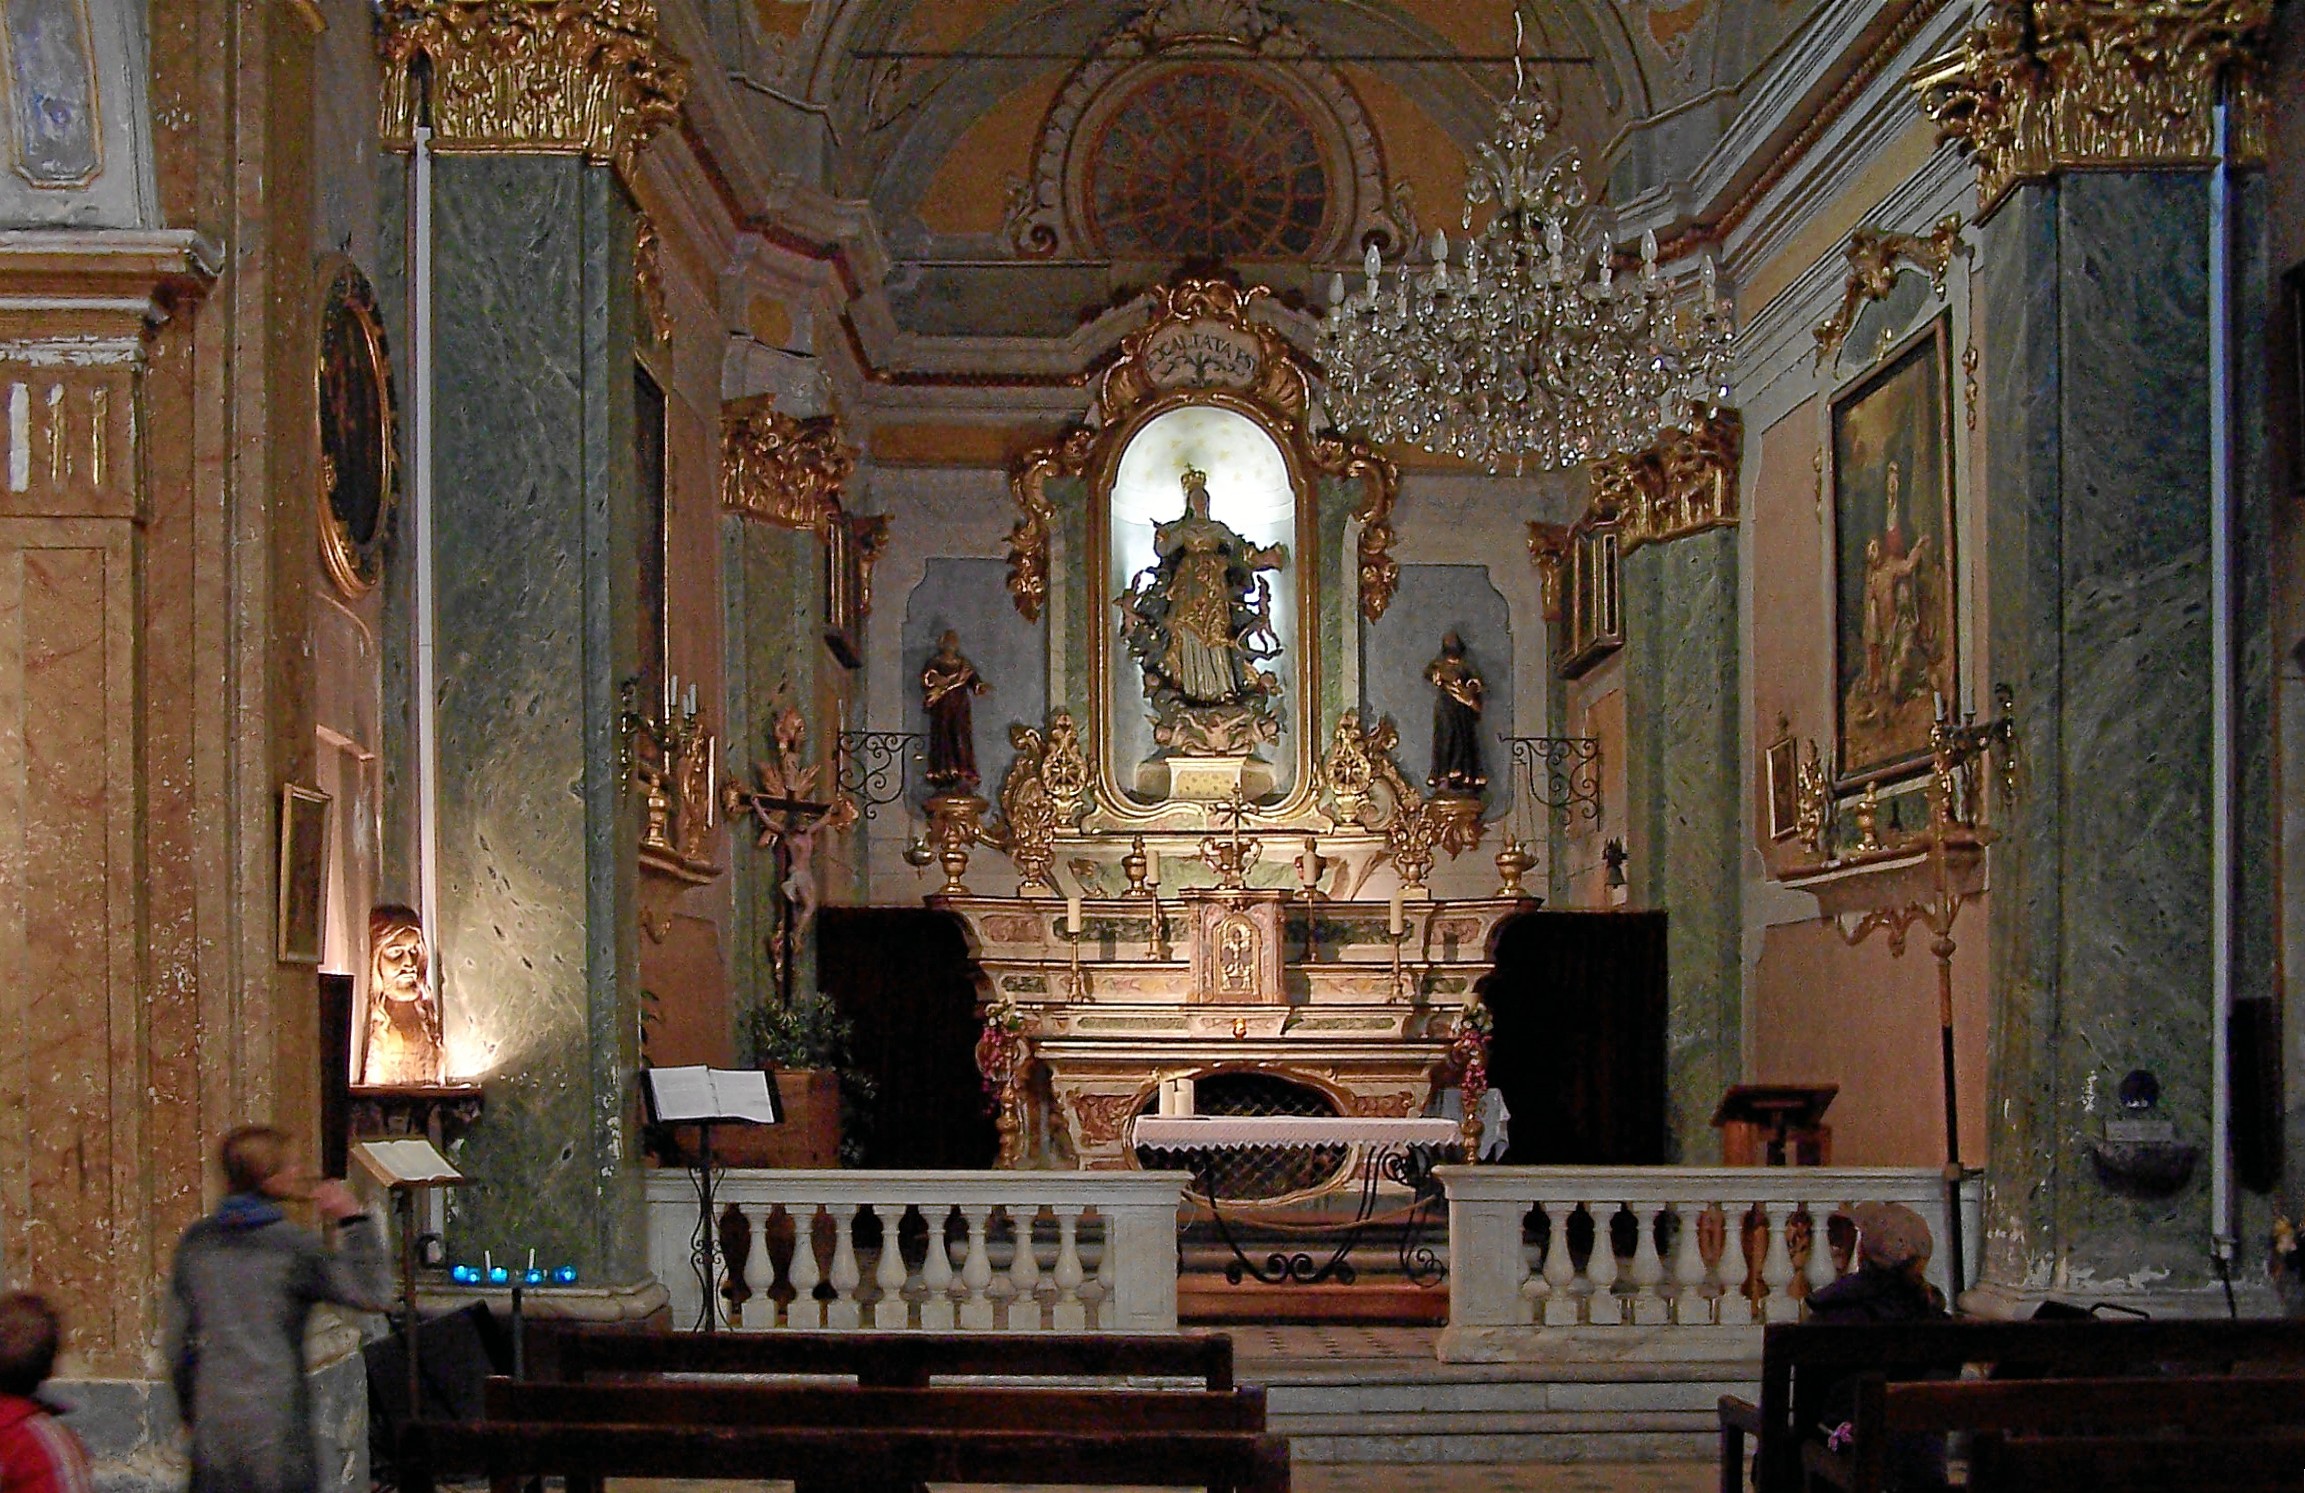 Inside the church photo